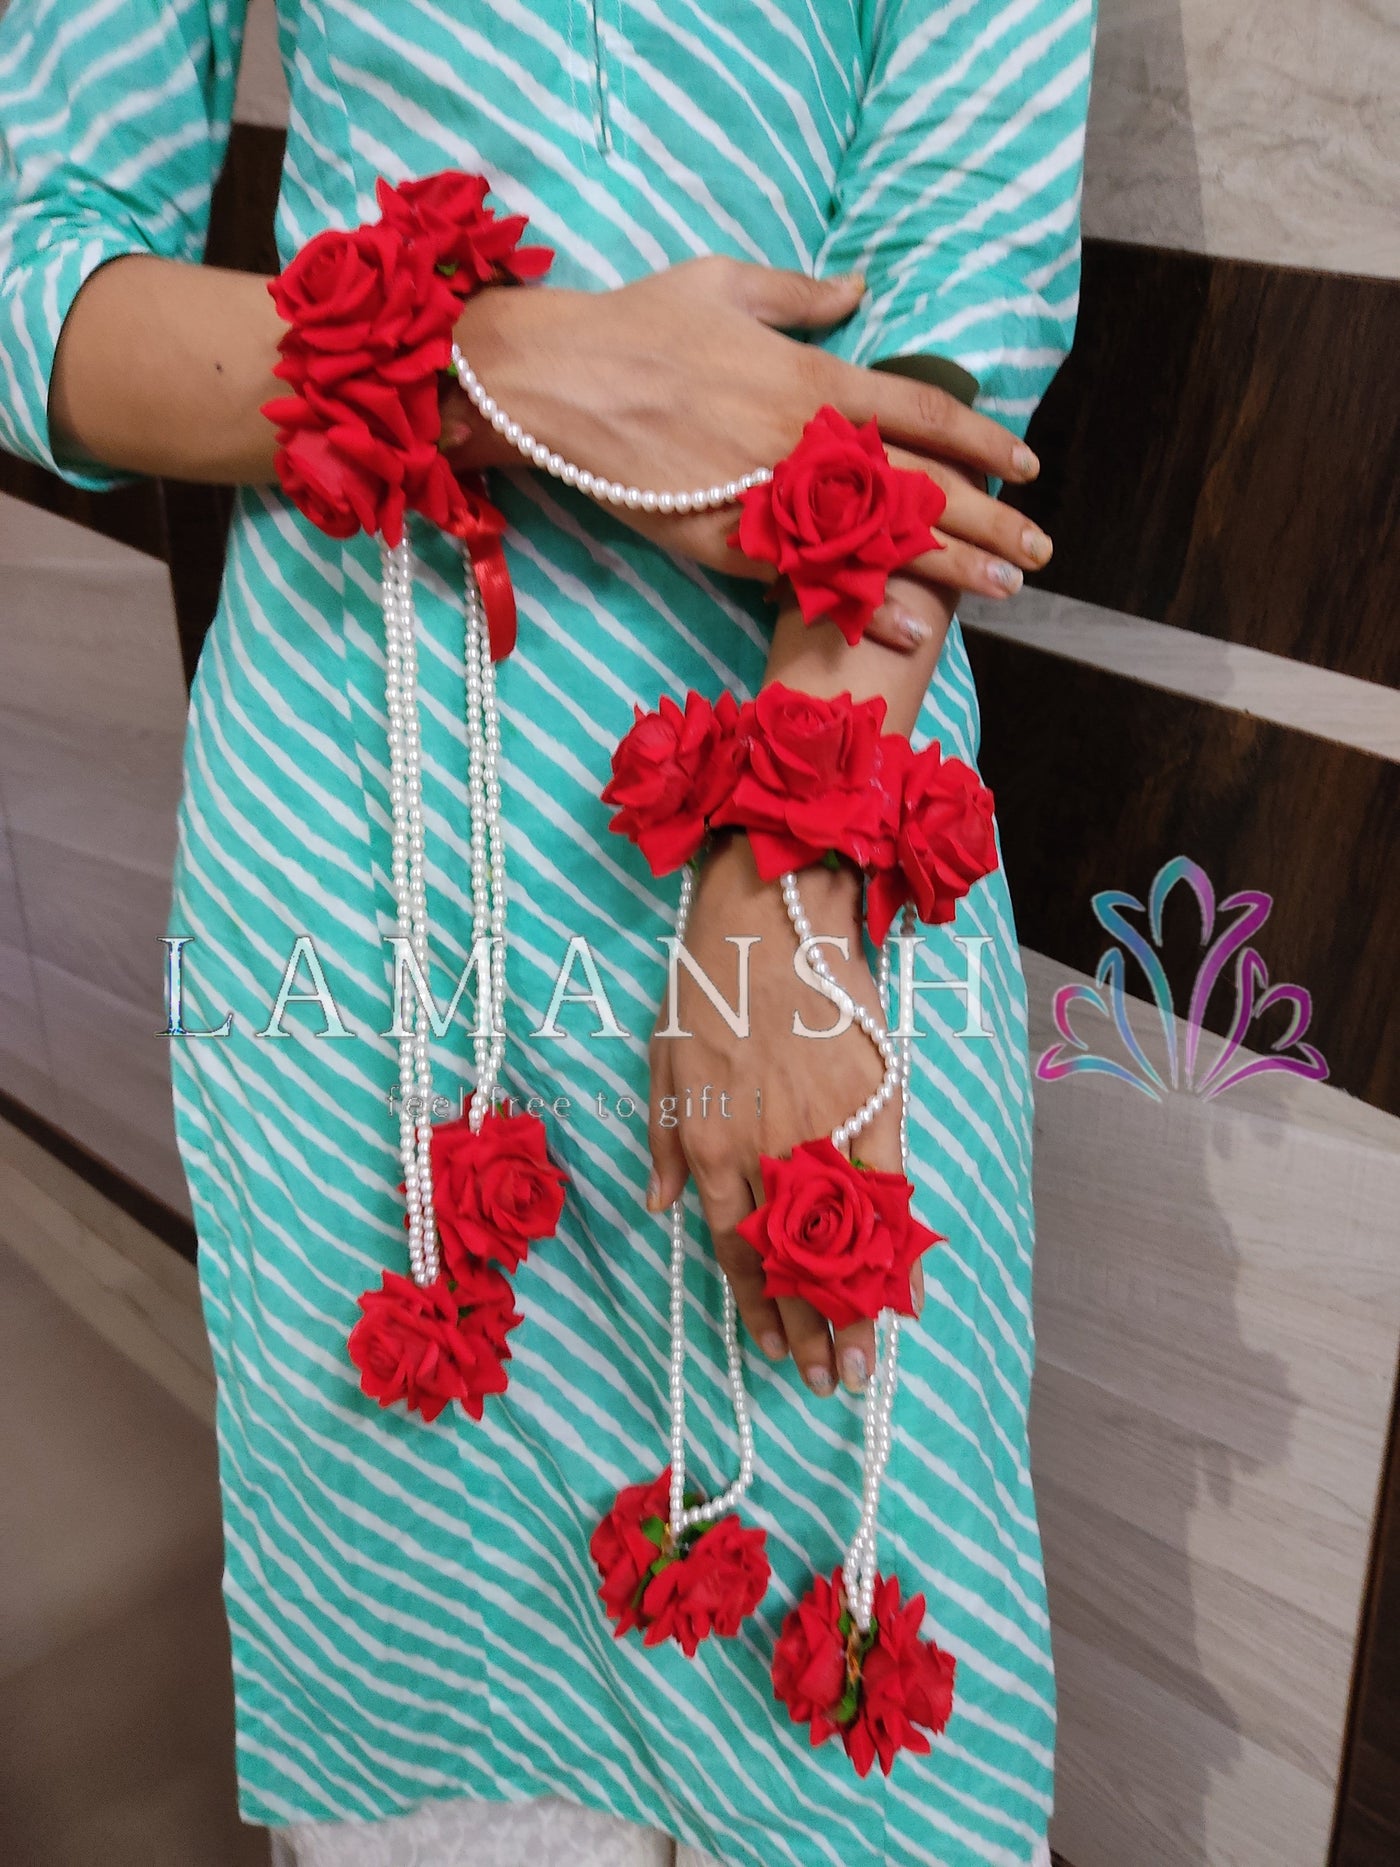 Lamansh Bracelet Ring Set Red / Artificial flowers / Haldi ,Wedding,Engagement Lamansh™ Red Rose Flower Ring Bracelet Set with Kalire for Engagement / Haldi / Floral Accessories set